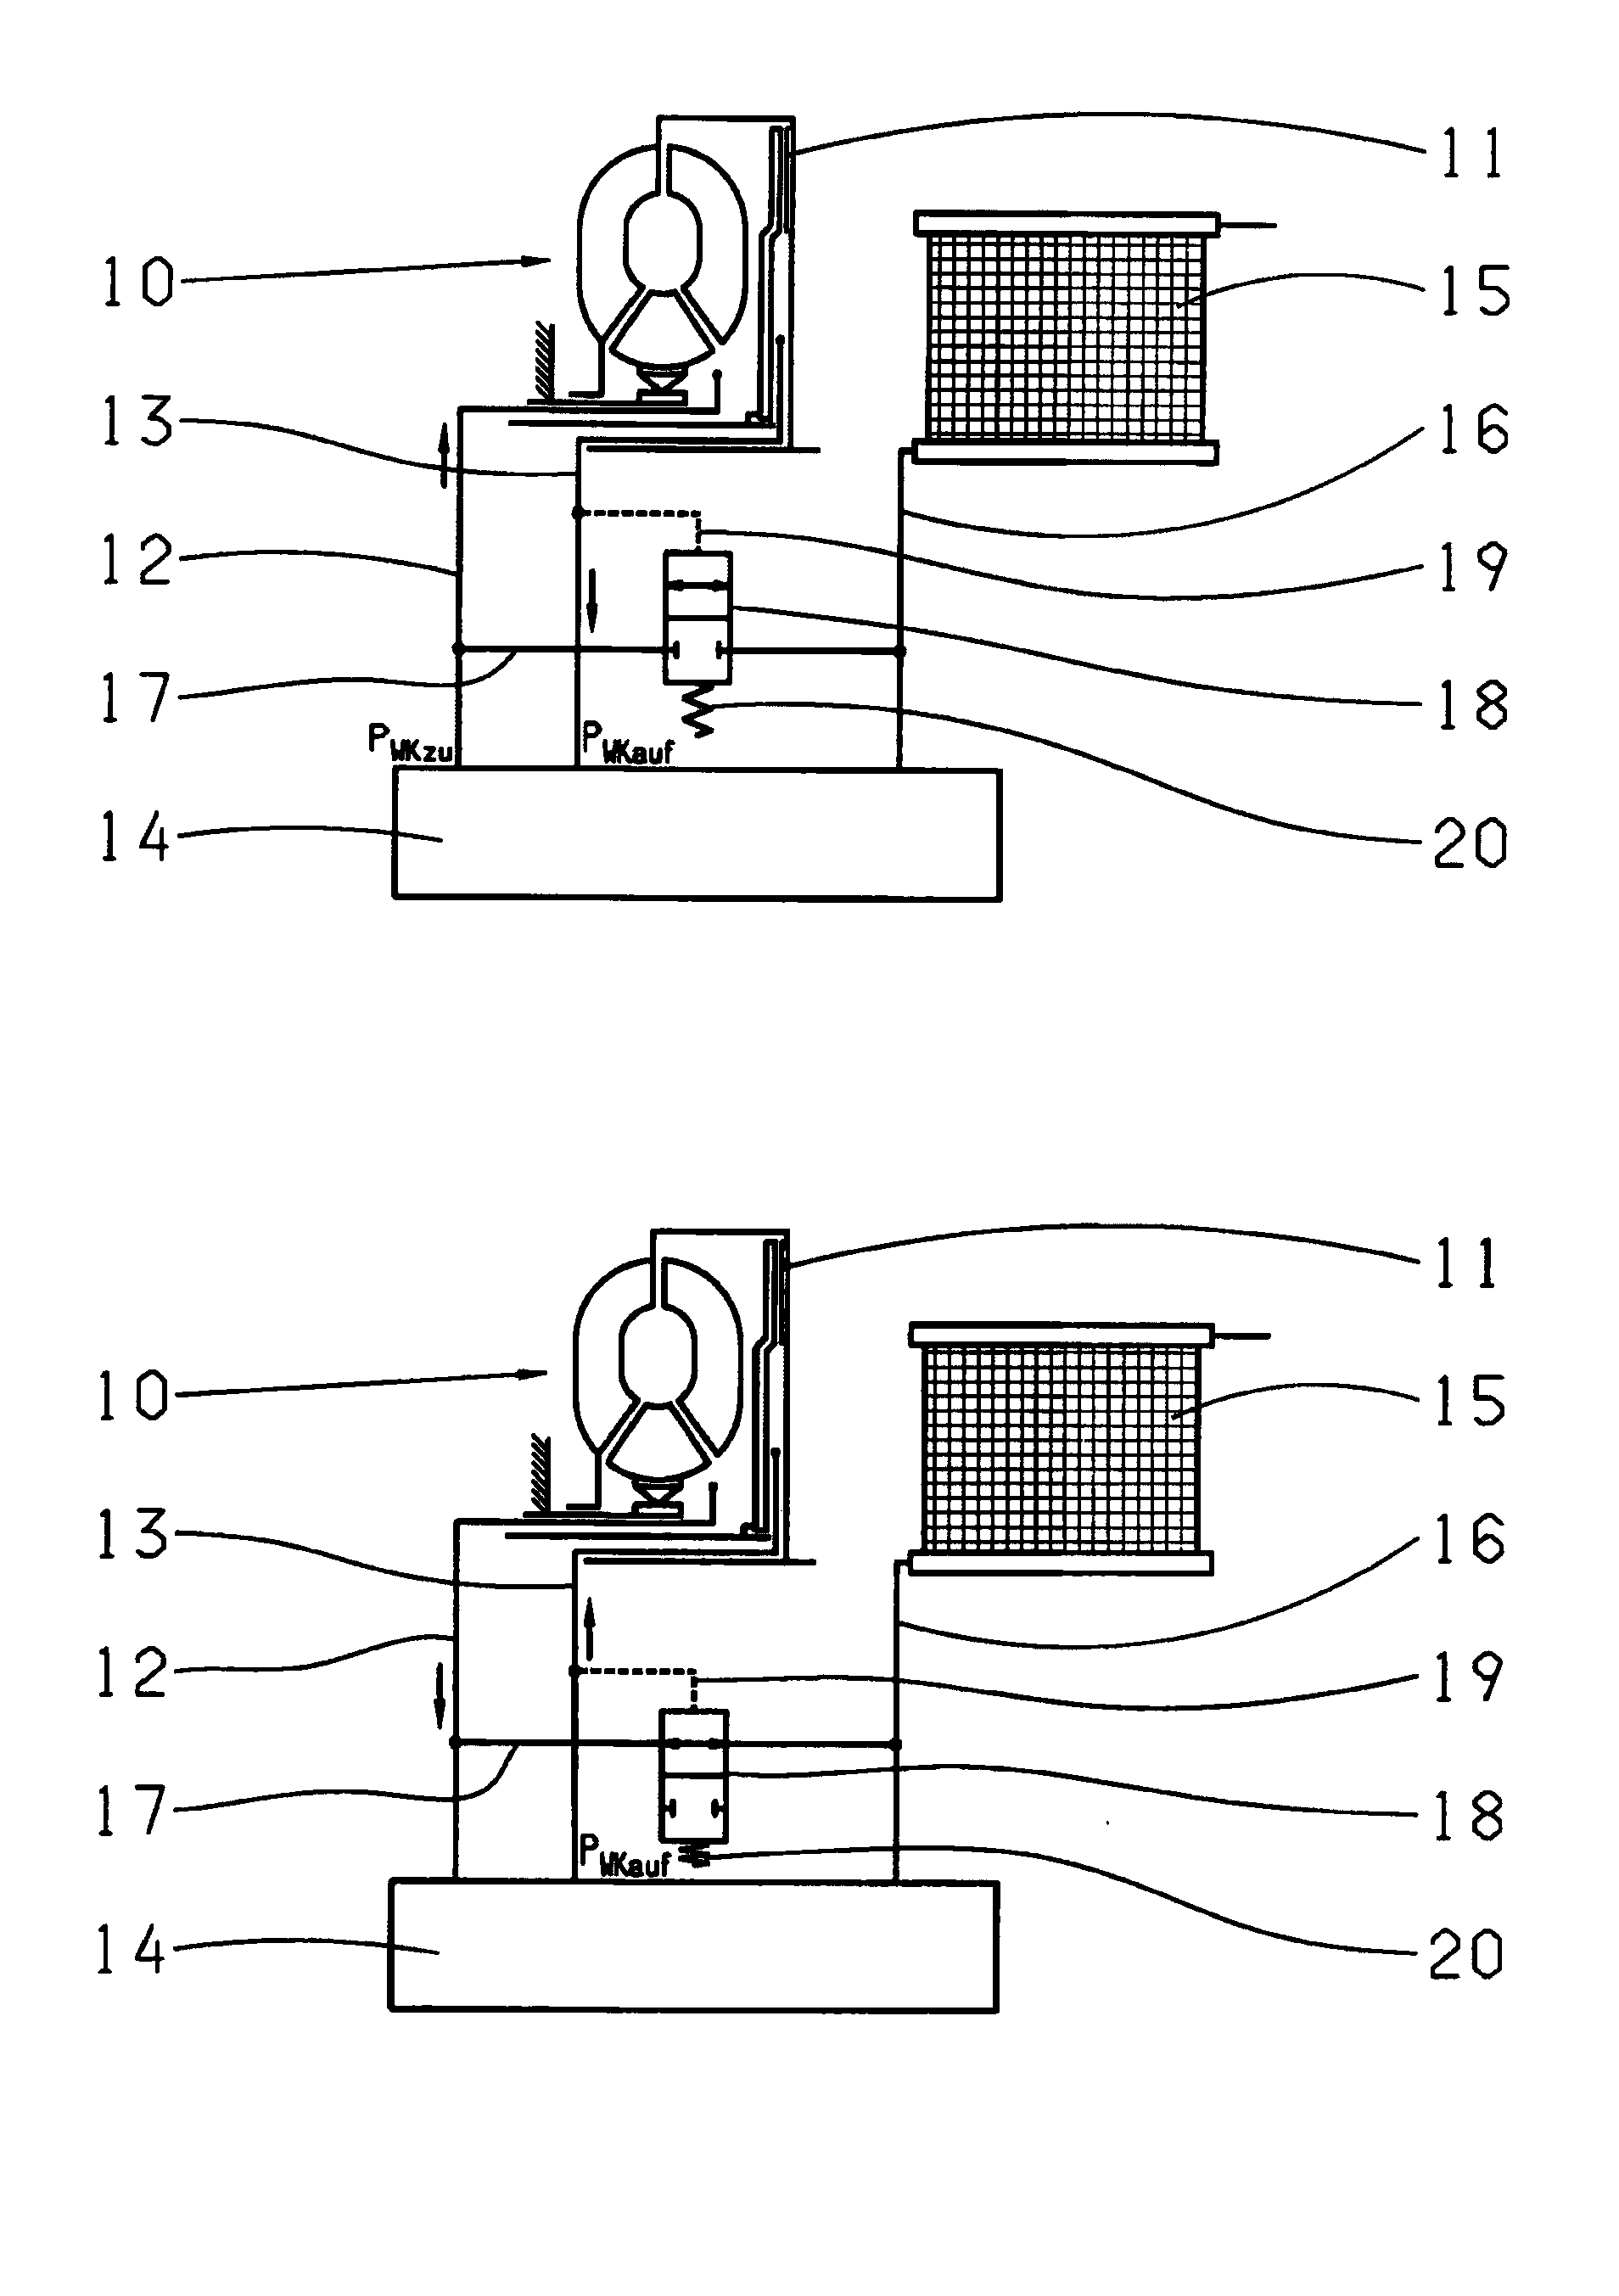 Hydraulic circuit arrangement for operating a hydrodynamic torque converter